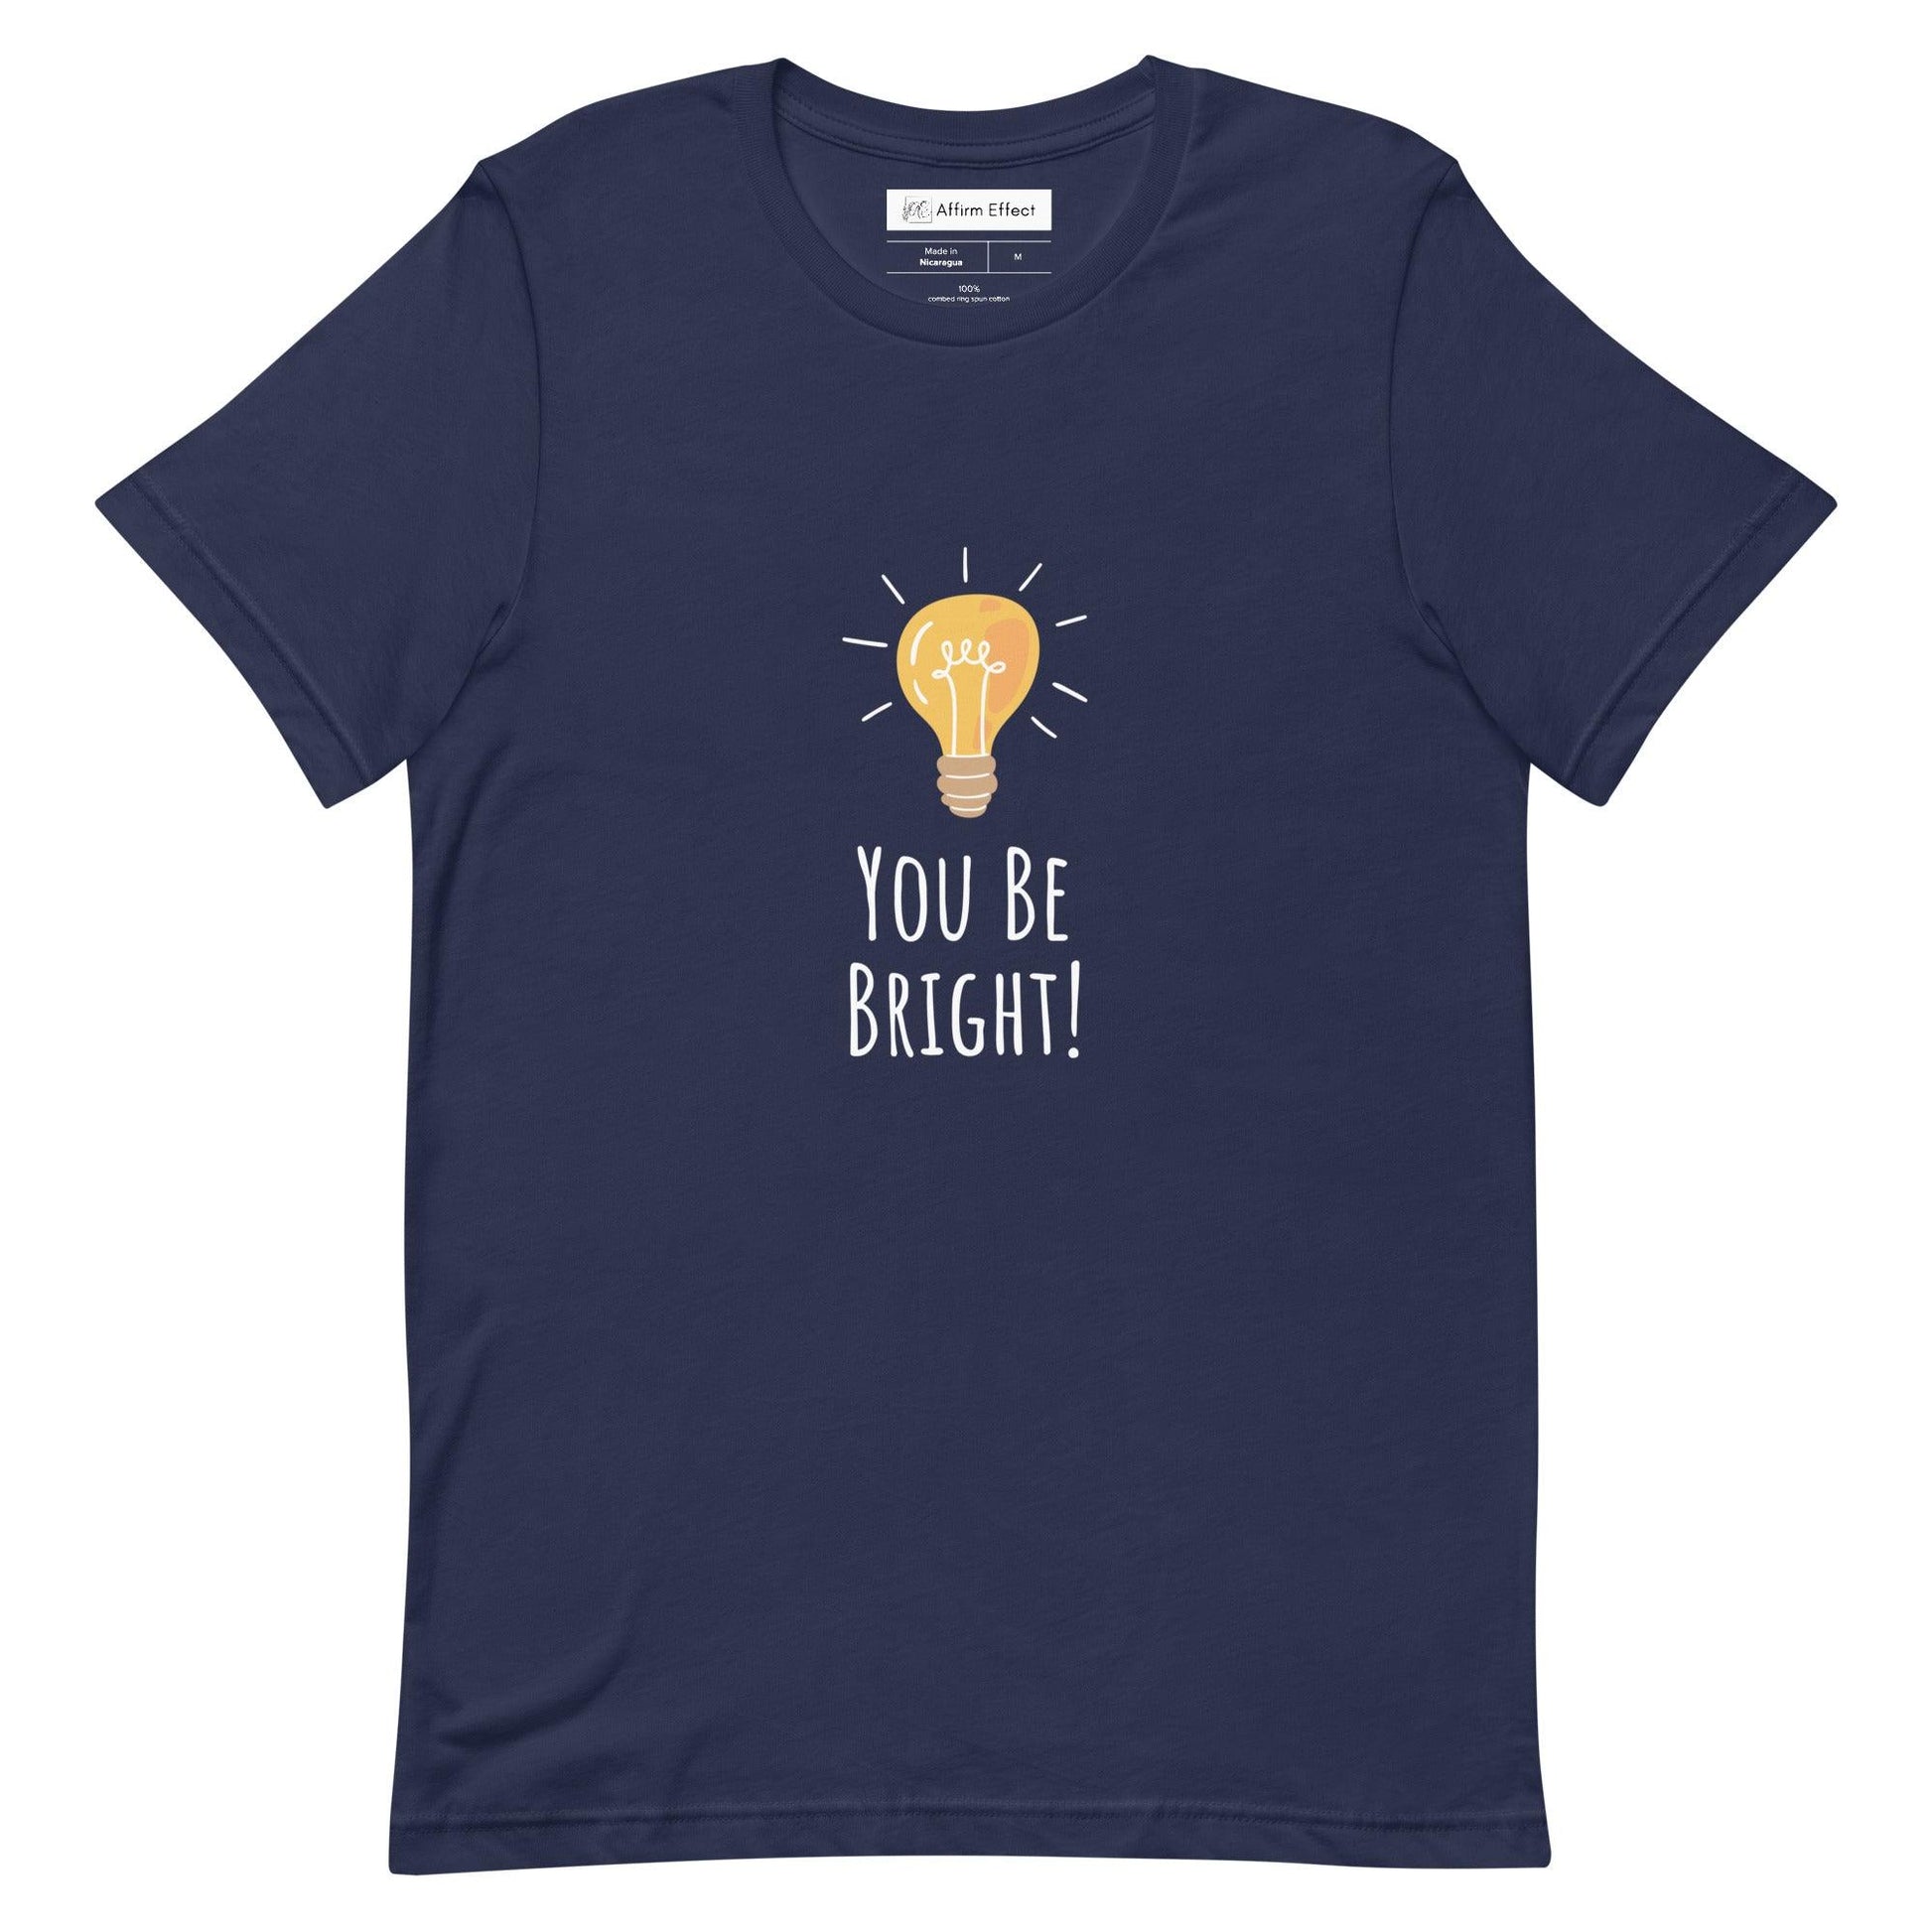 You Be Bright, Premium Short-Sleeve Unisex T-Shirt | Positive Affirmation Tee - Affirm Effect